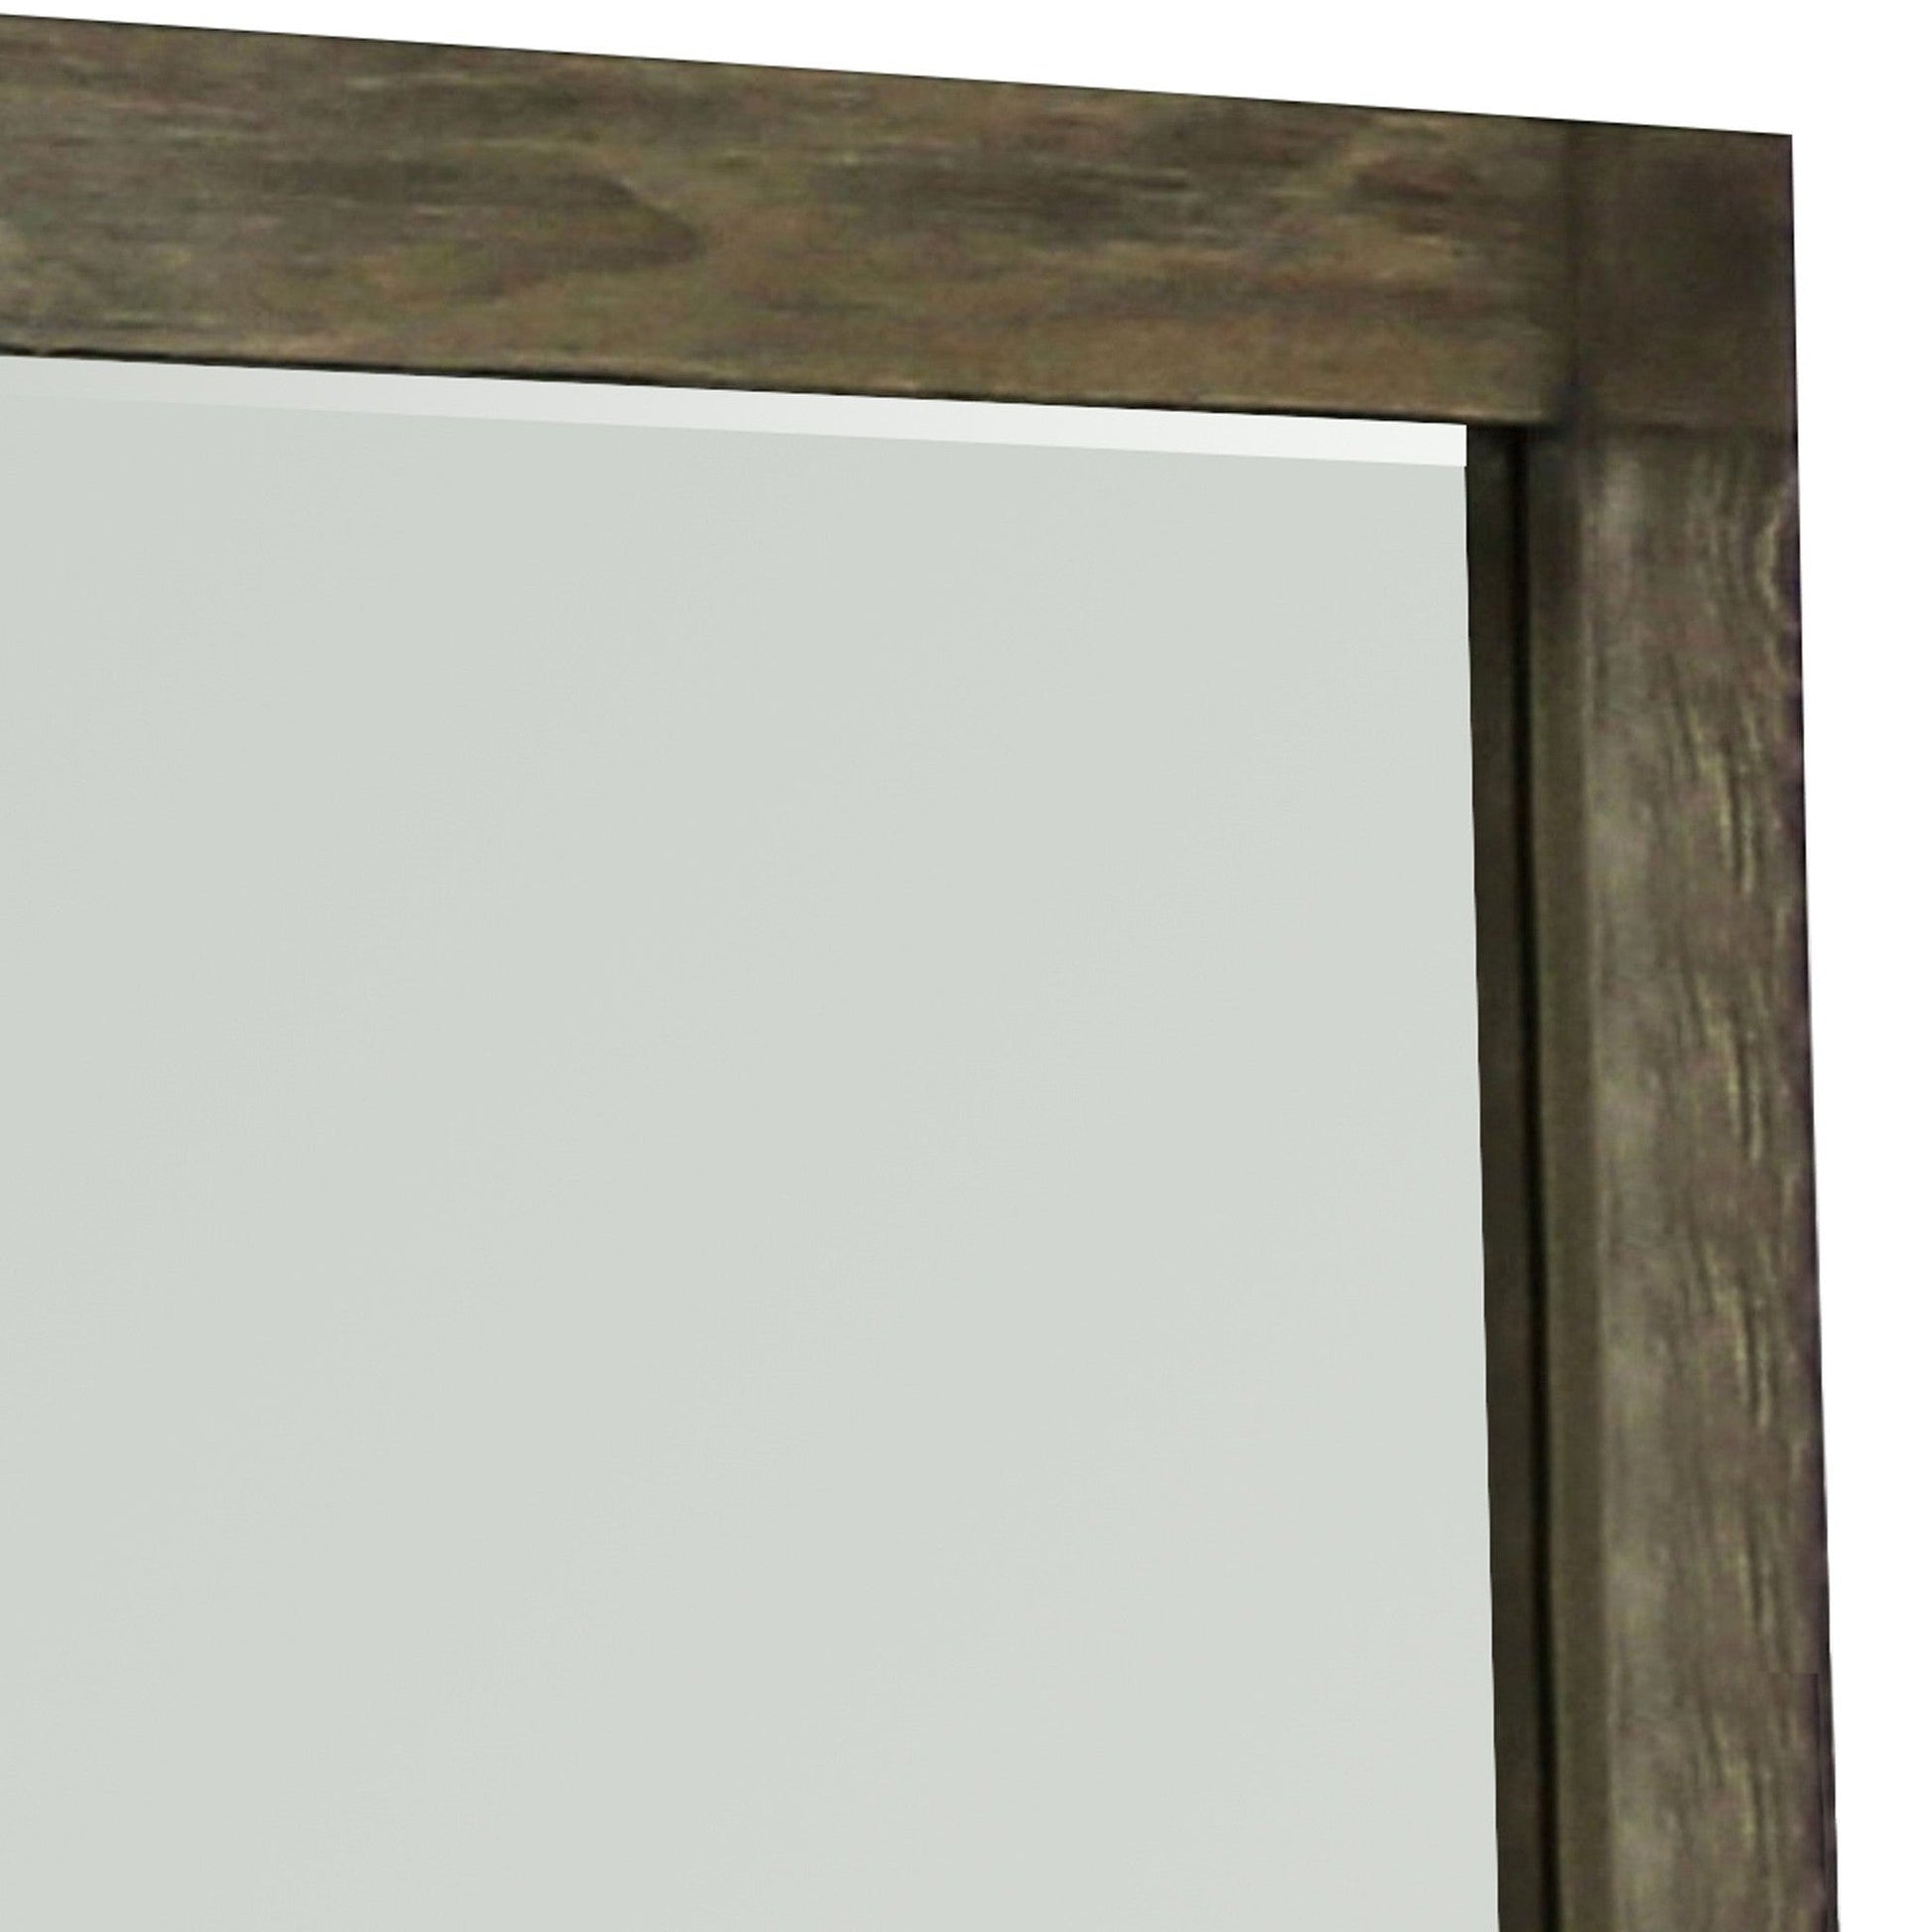 Benzara Brown Traditional Style Rectangular Mirror With Textured Wood Grain Details